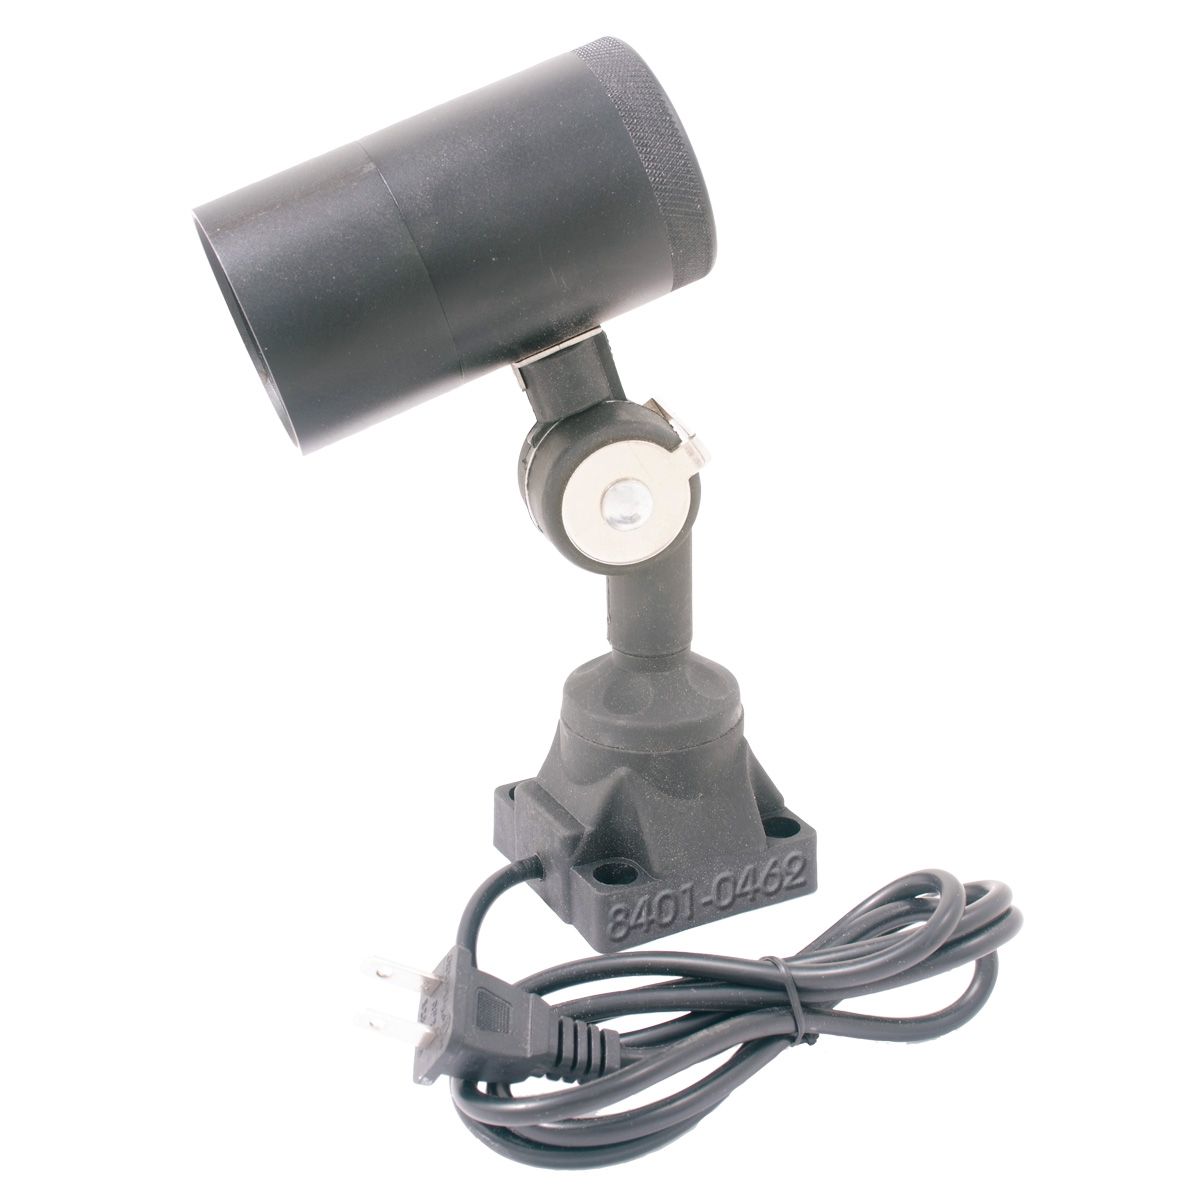 5 WATT WATERPROOF LED SHORT ARM WORK LIGHT (8401-0462)